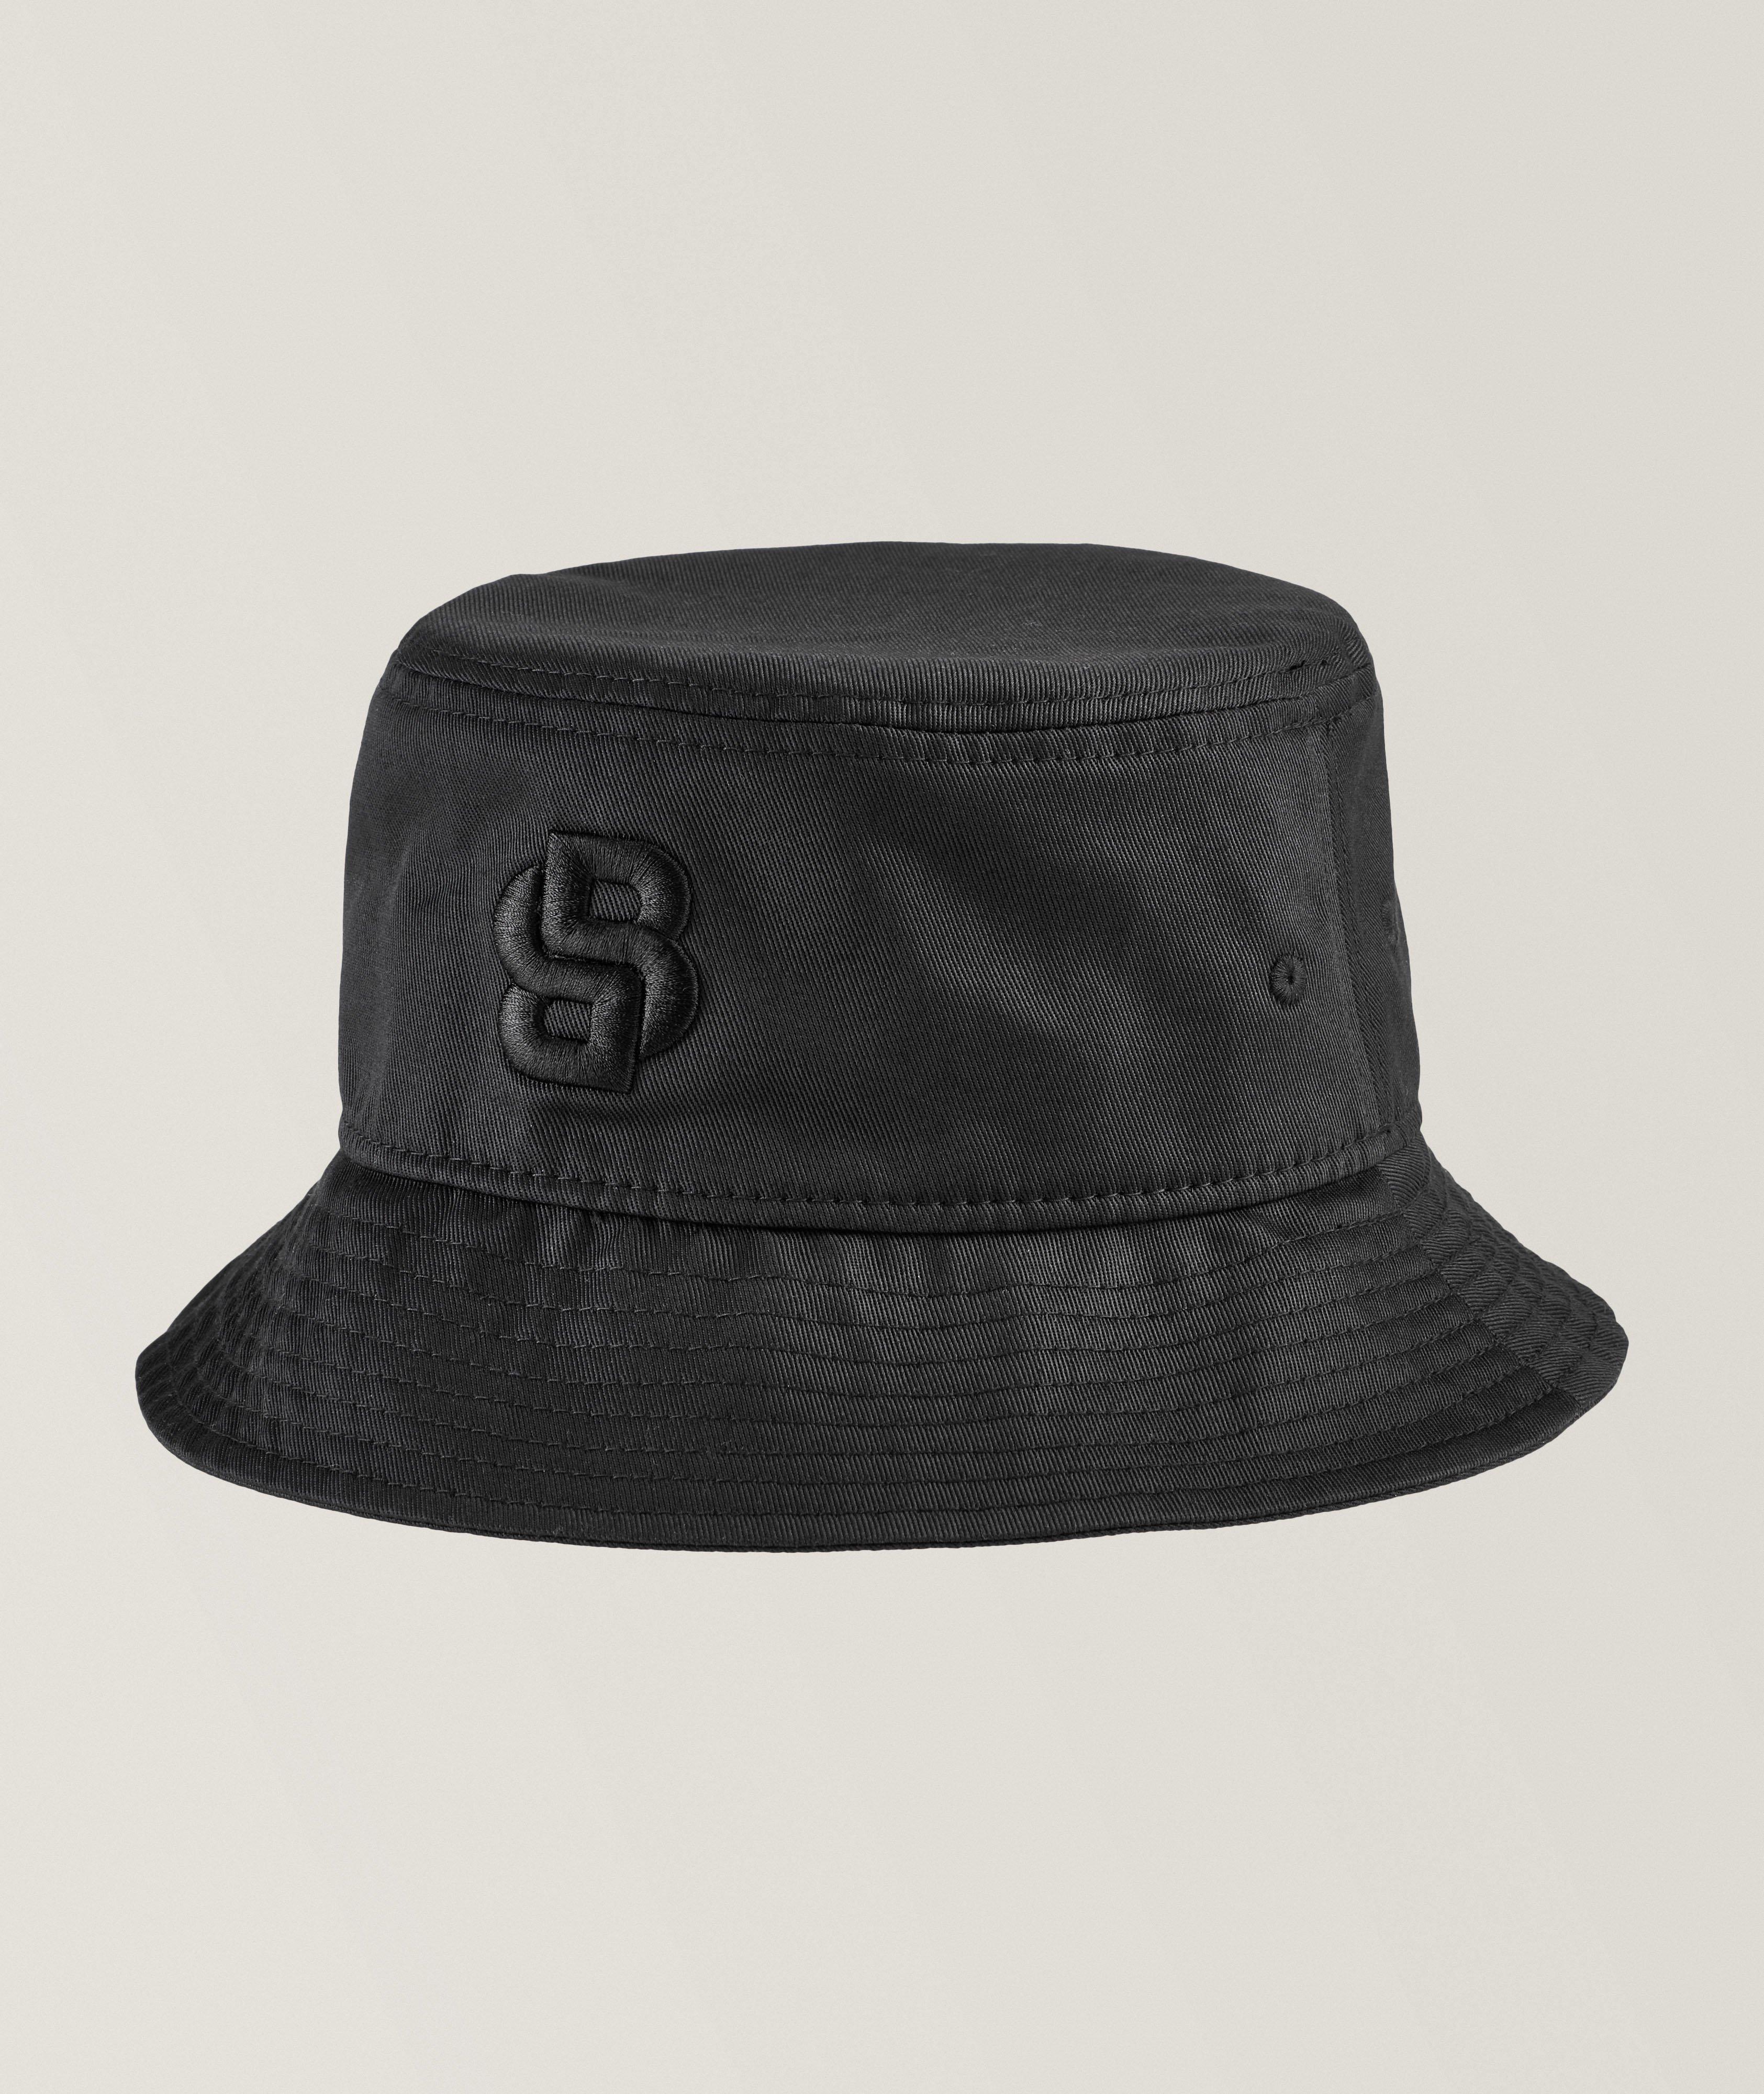 Hugo Boss Saul B Iconic Cotton Bucket Hat, Hats